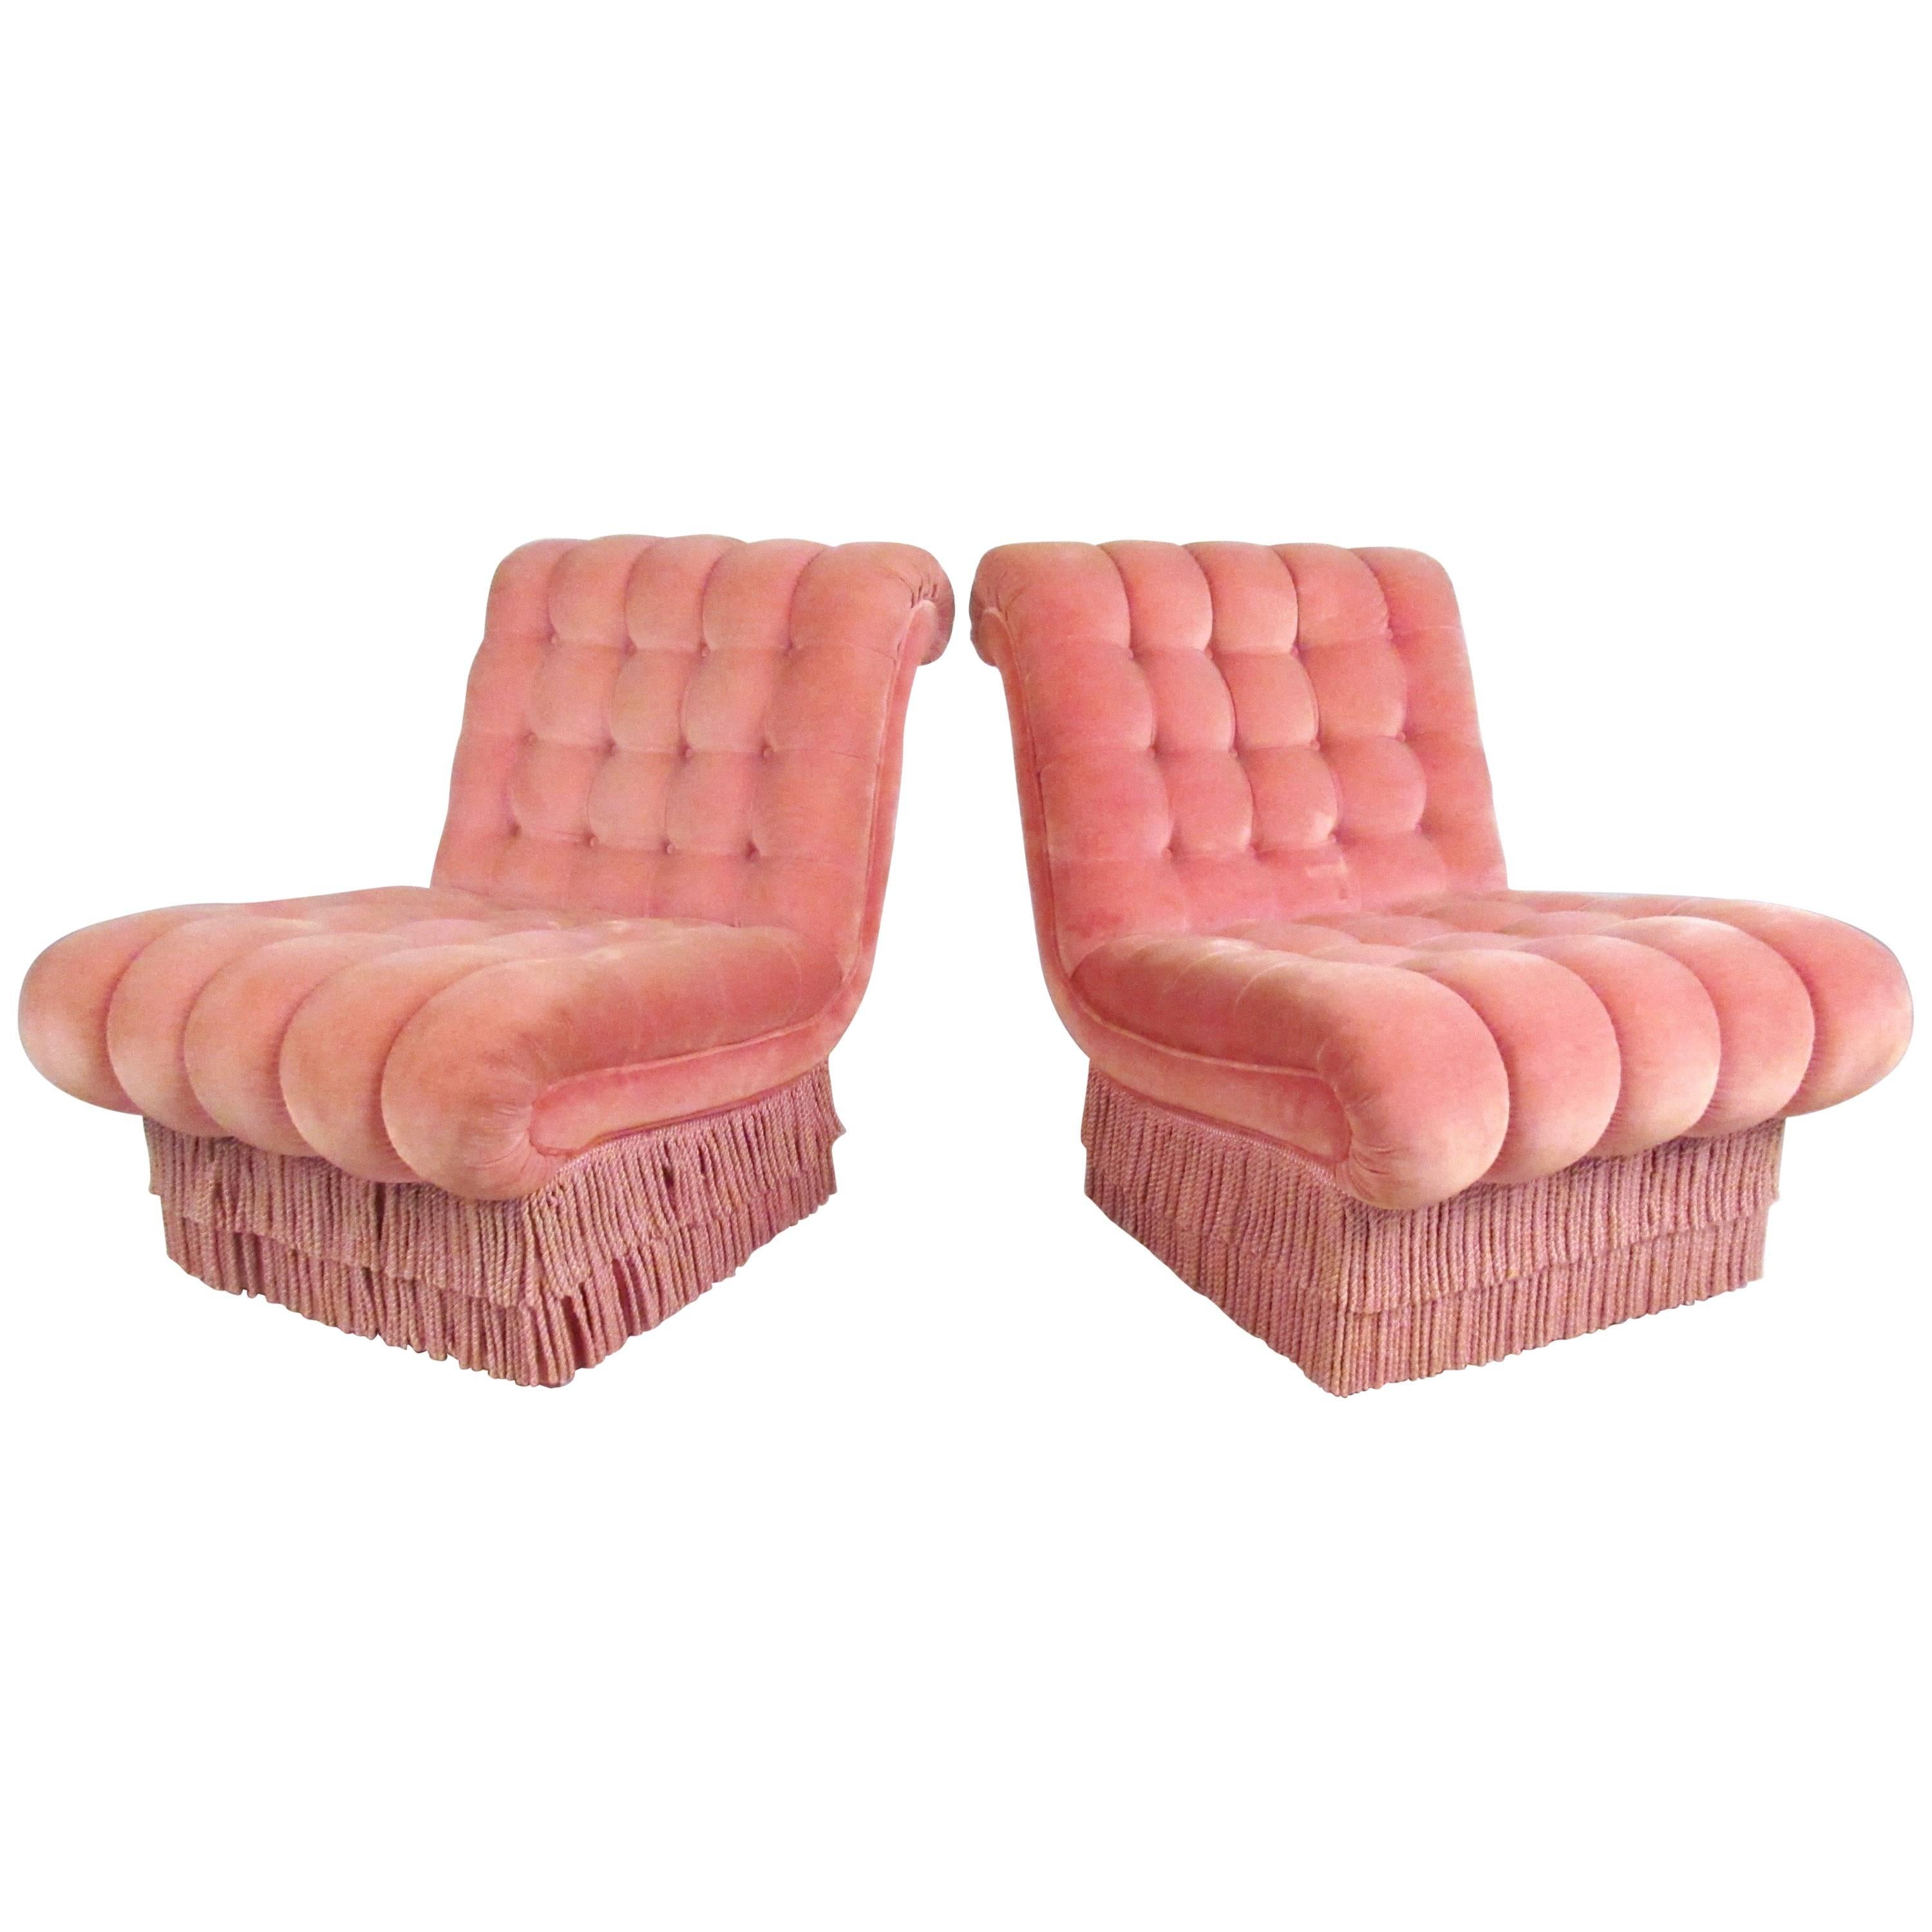 Pair of Vintage Boudoir Slipper Chairs